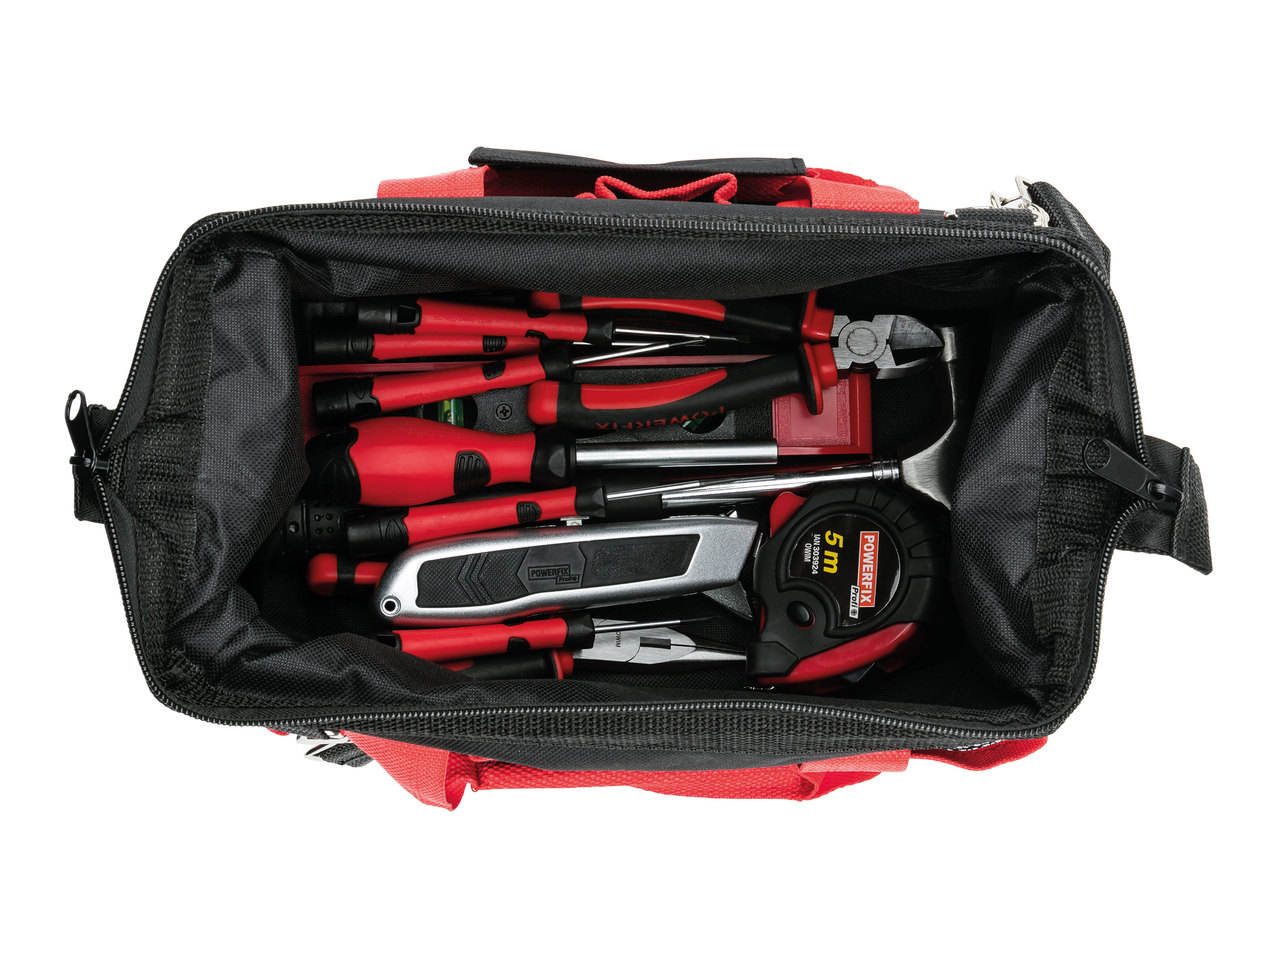 Powerfix Profi Tool Kit in a Bag1